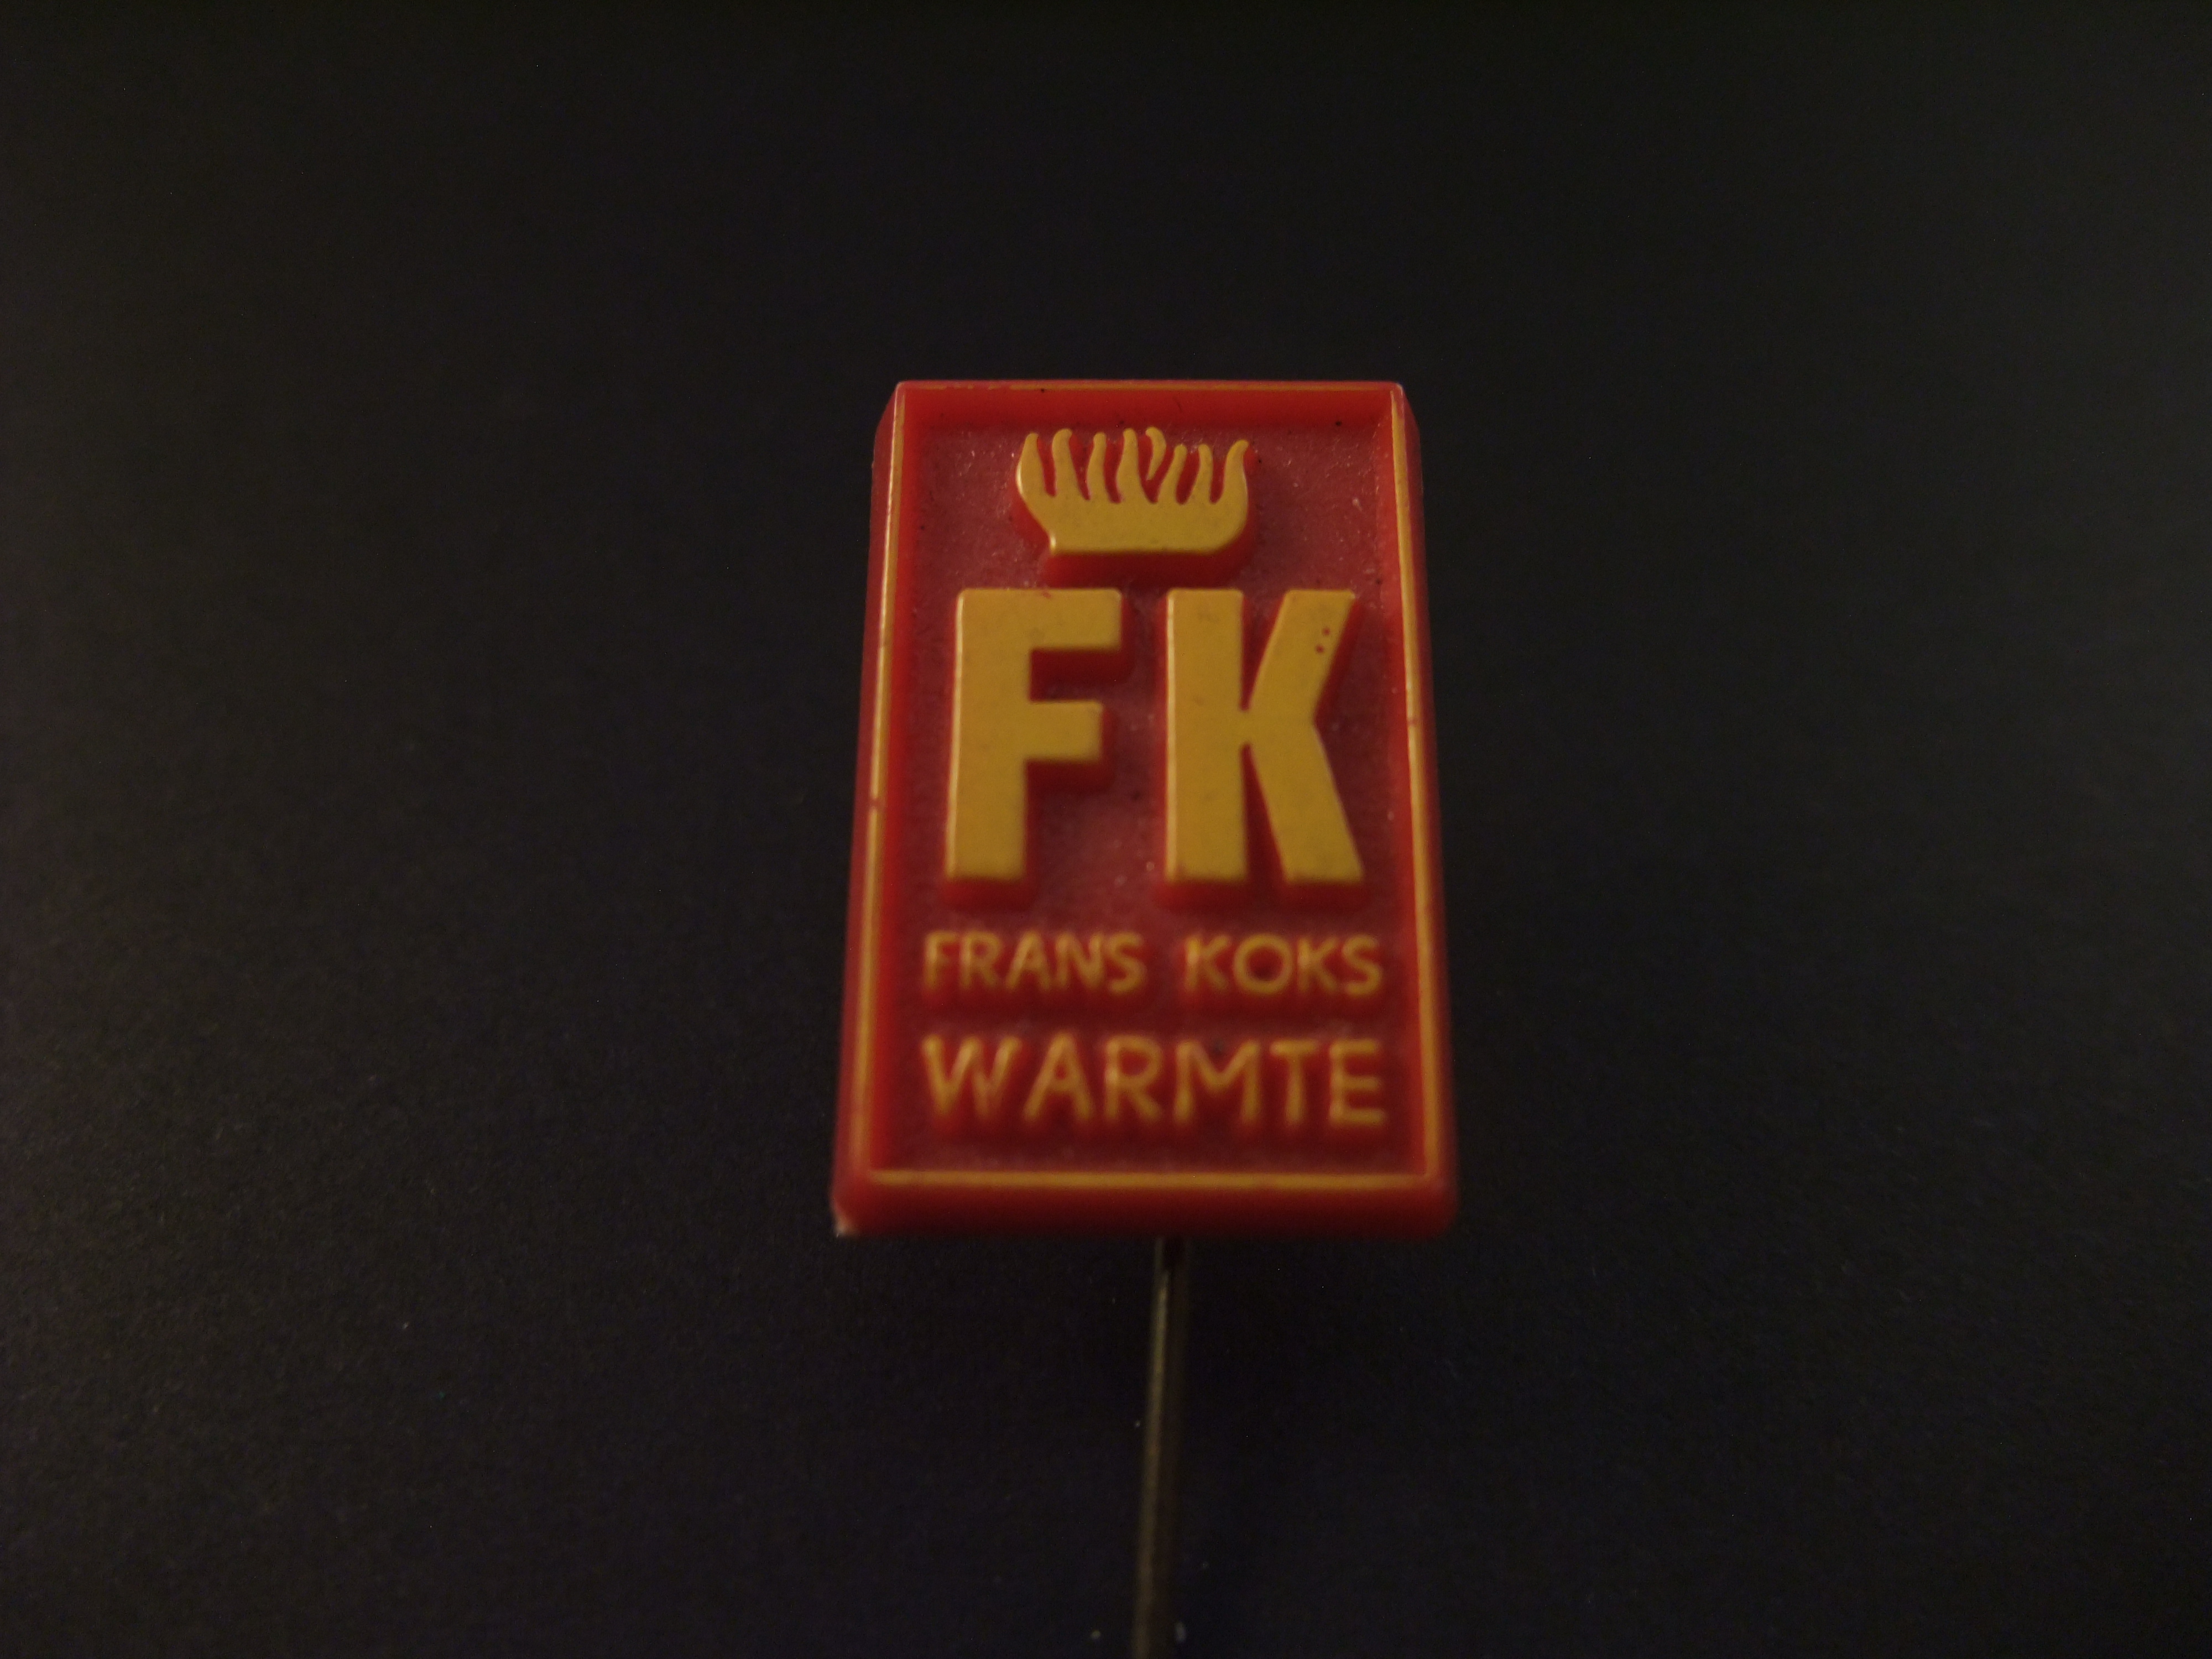 Frans Koks ( FK ) warmte -brandstof